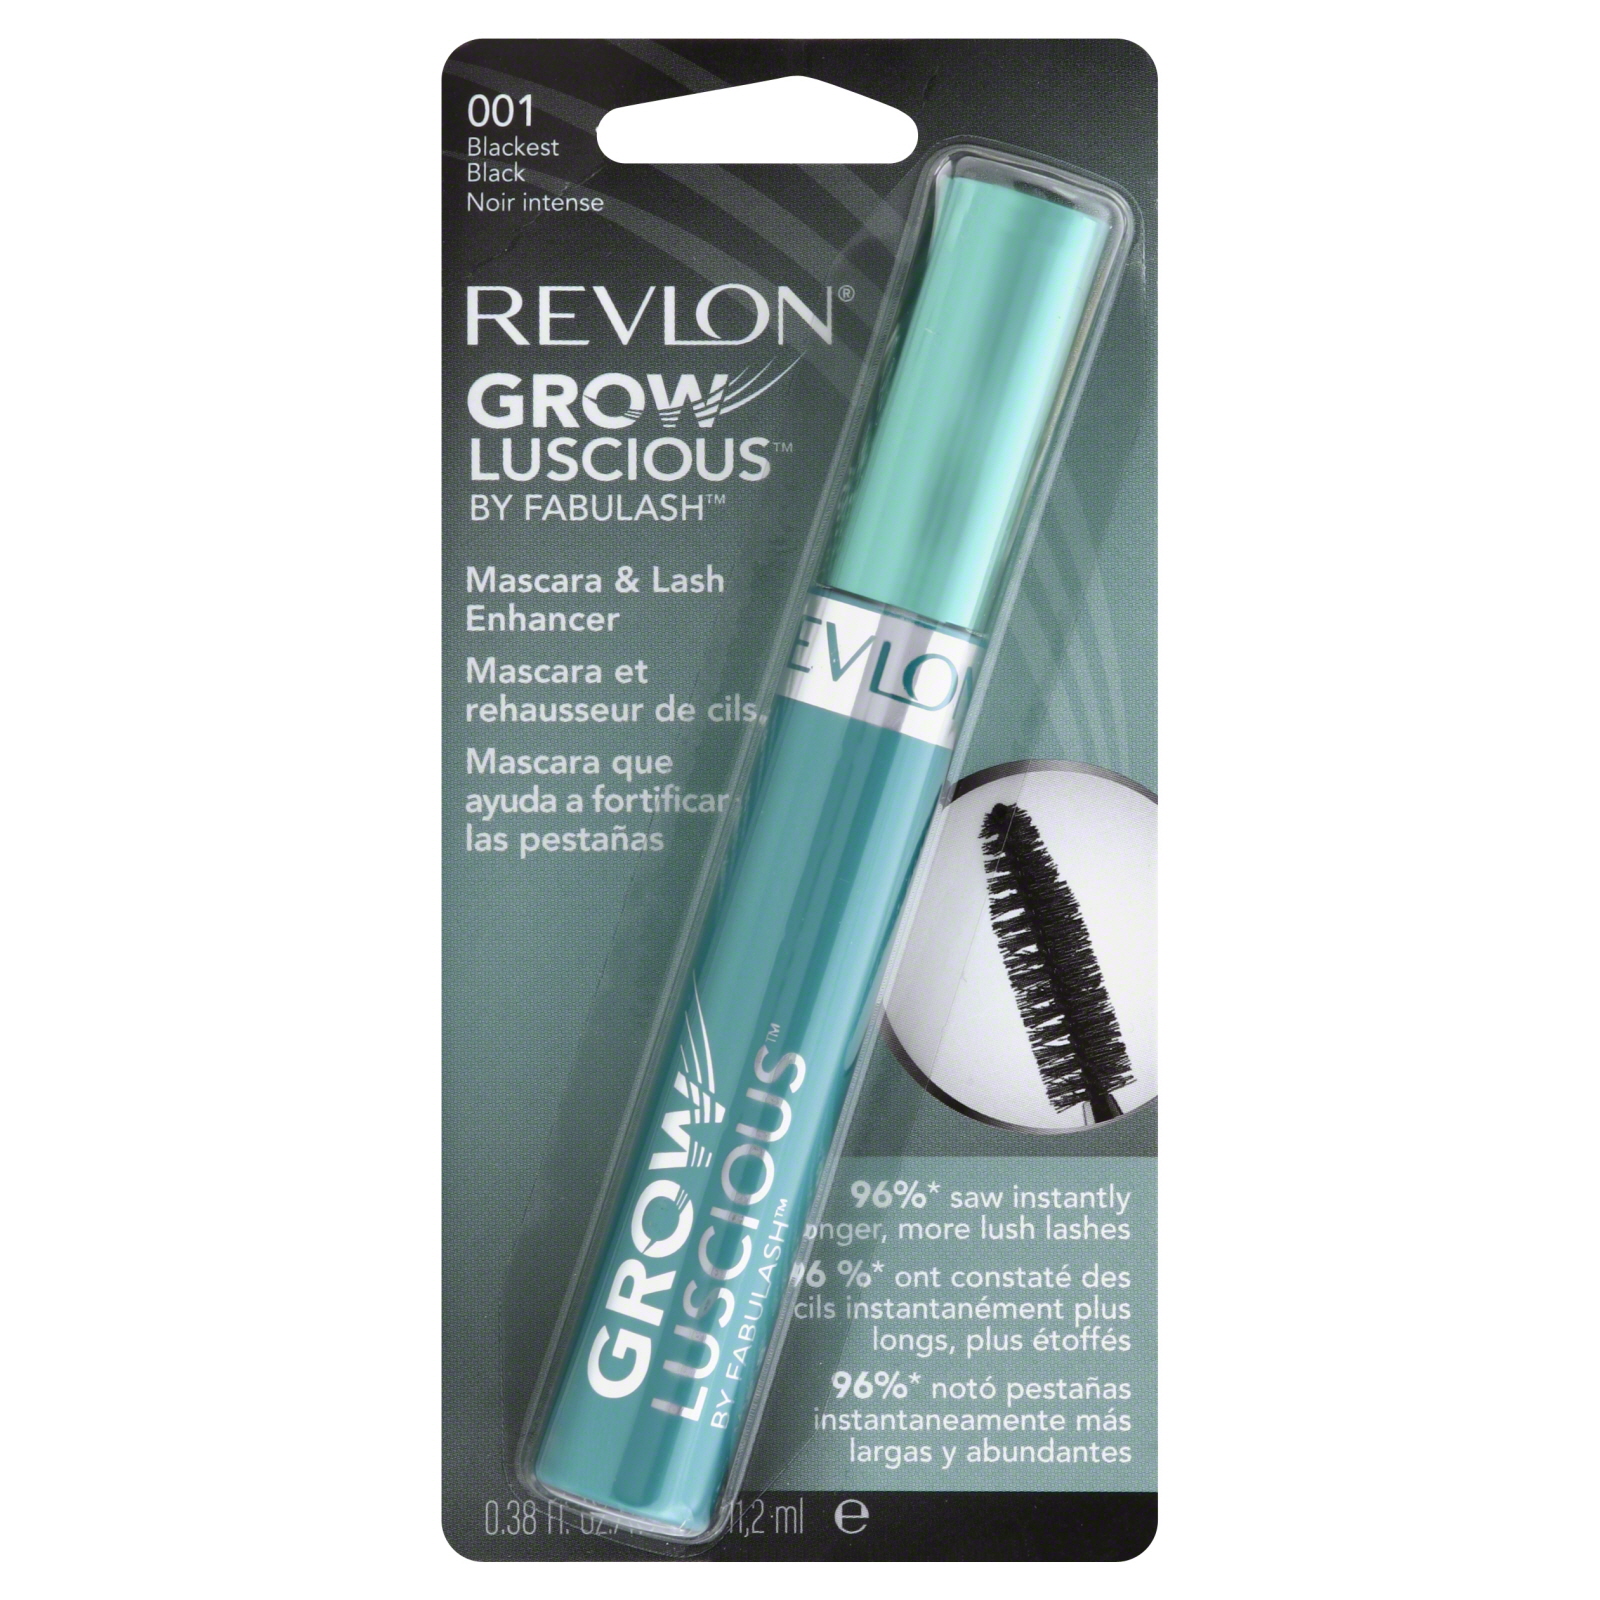 Revlon Grow Luscious Mascara & Lash Enhancer, Blackest Black 001, 0.38 fl oz (11.2 ml)